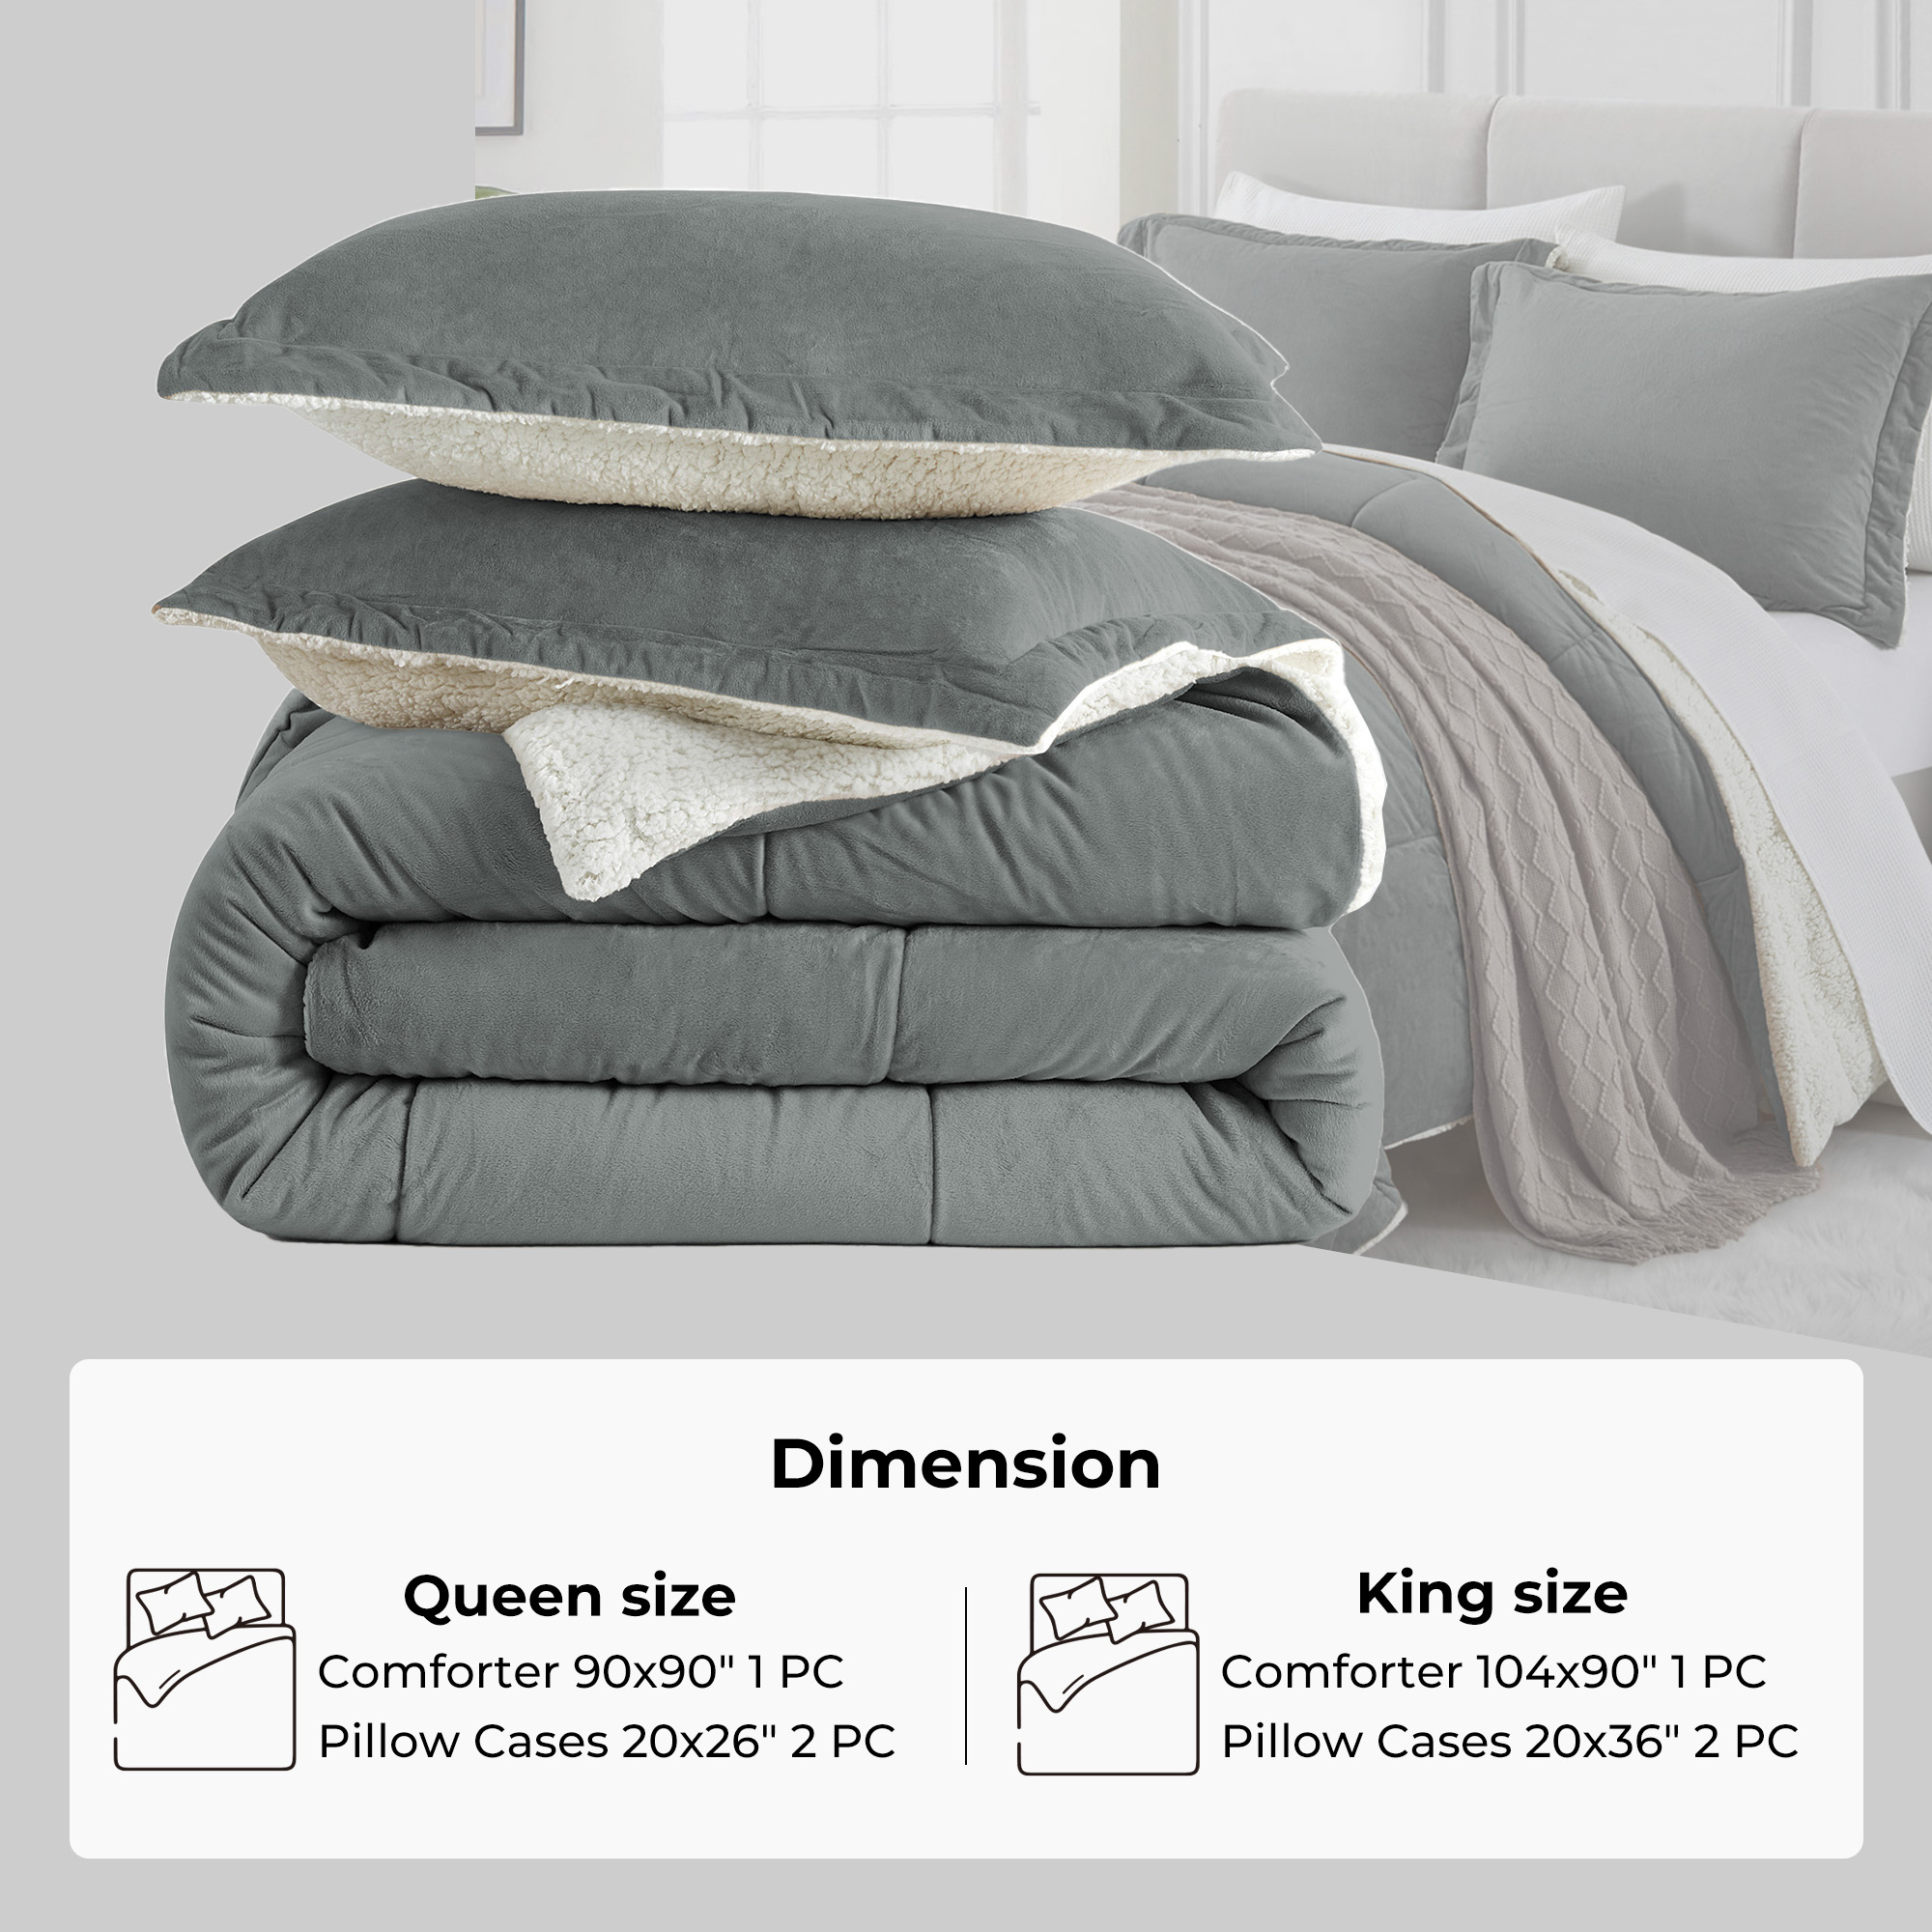 3 Piece All Season Comforter Set With Shams Reversible Faux Shearling-Down Alternative Comforter Set - Dark Gray, King Size-10490